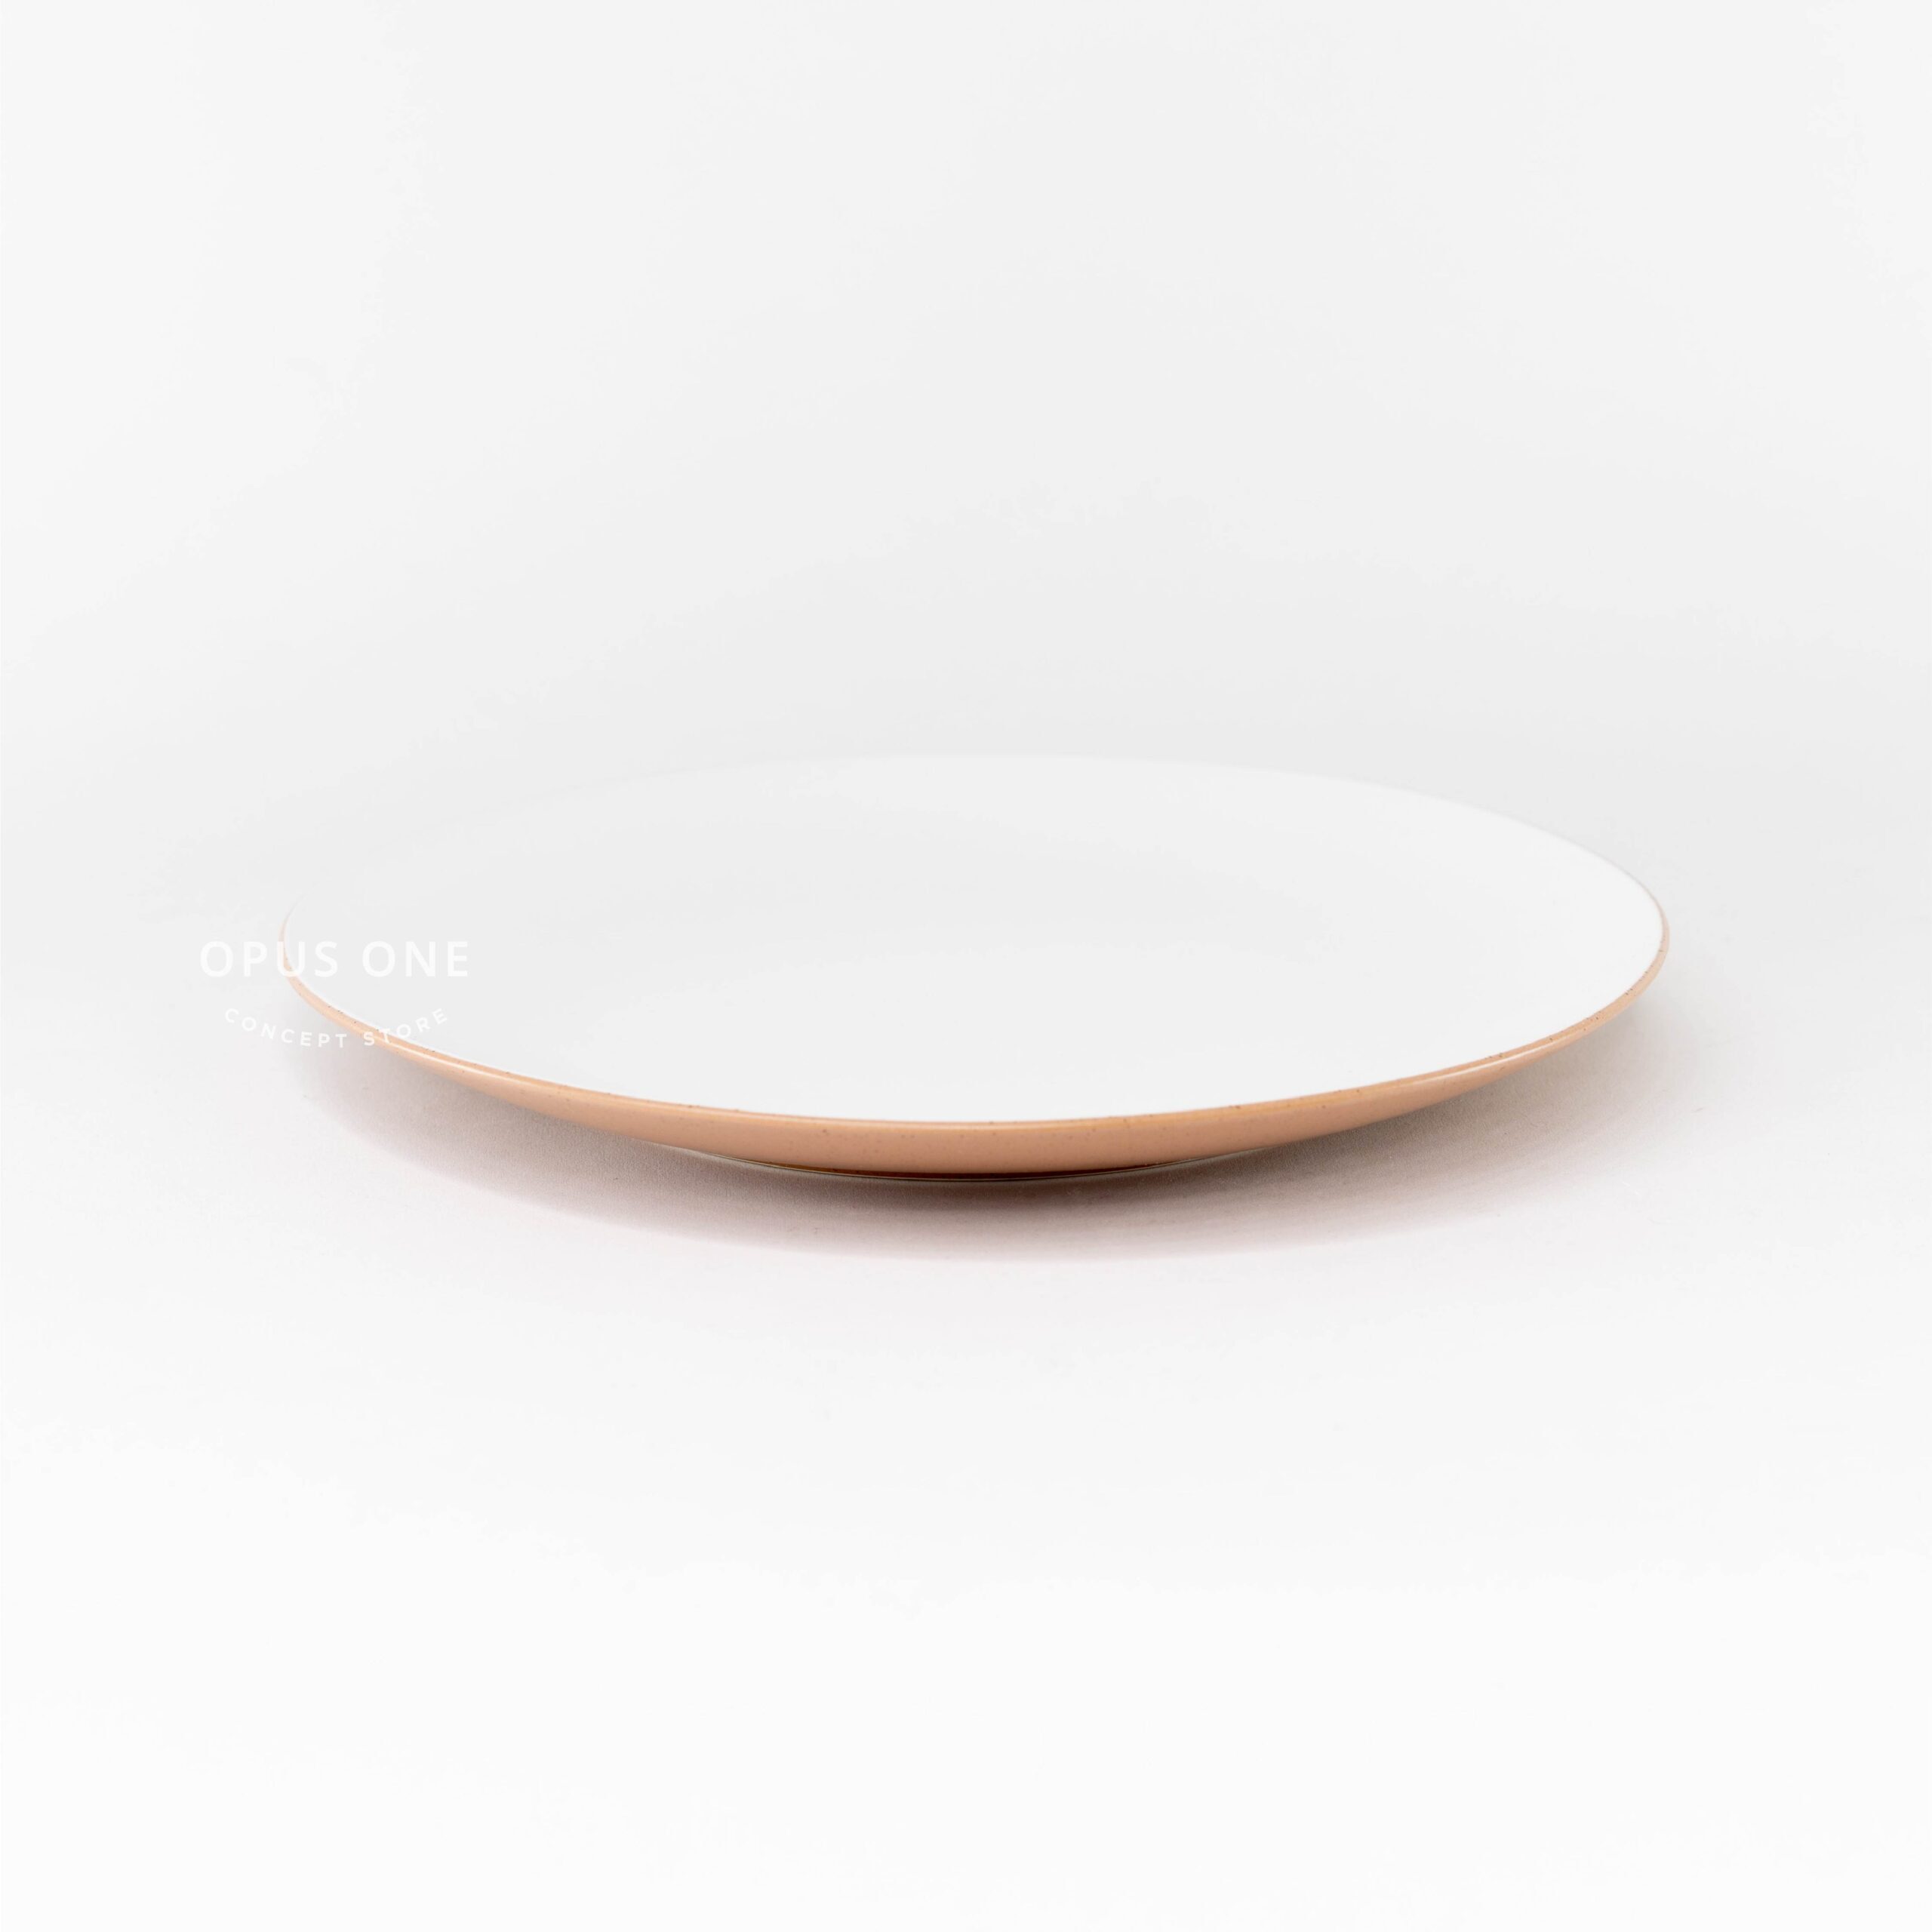 Opus One Dinner Plate Aroma Bumi 28cm White Satin PC-28 SJL 15545